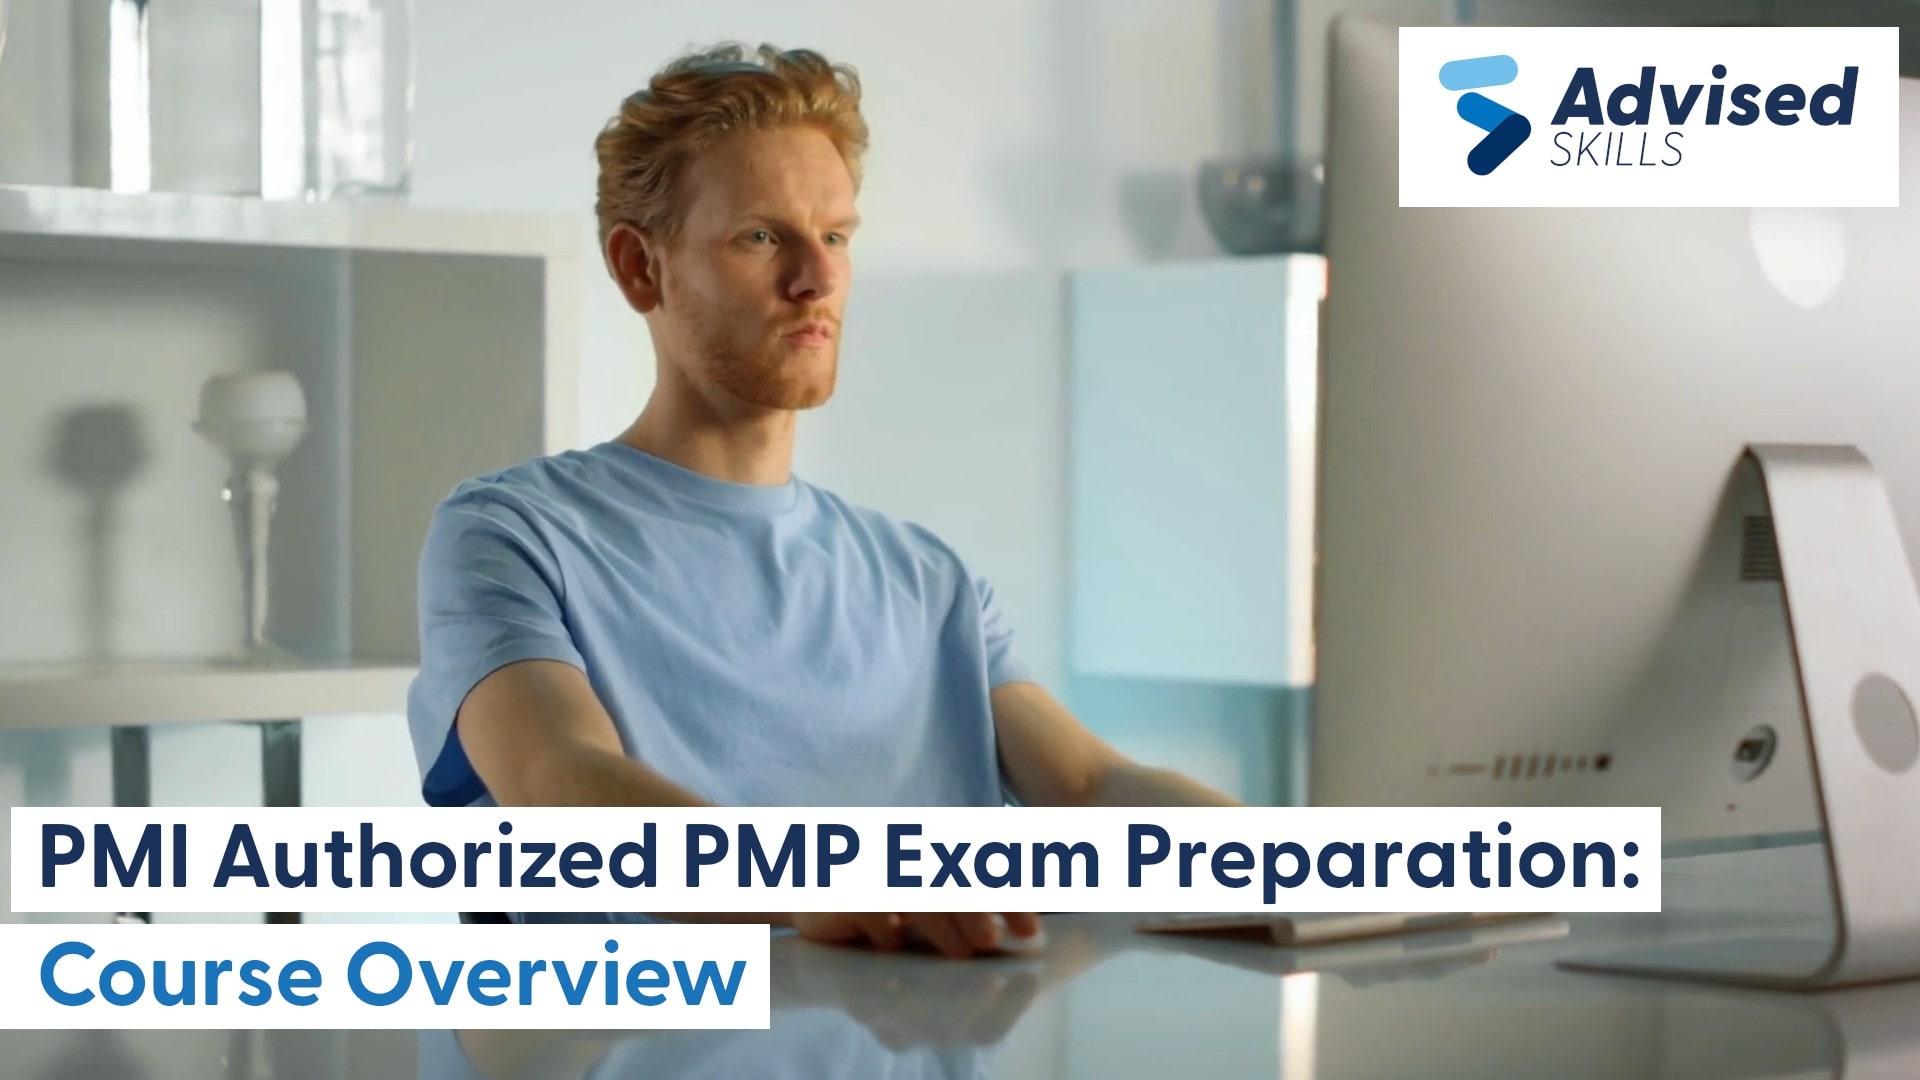 PMI Authorized PMP Exam Preparation Course Overview